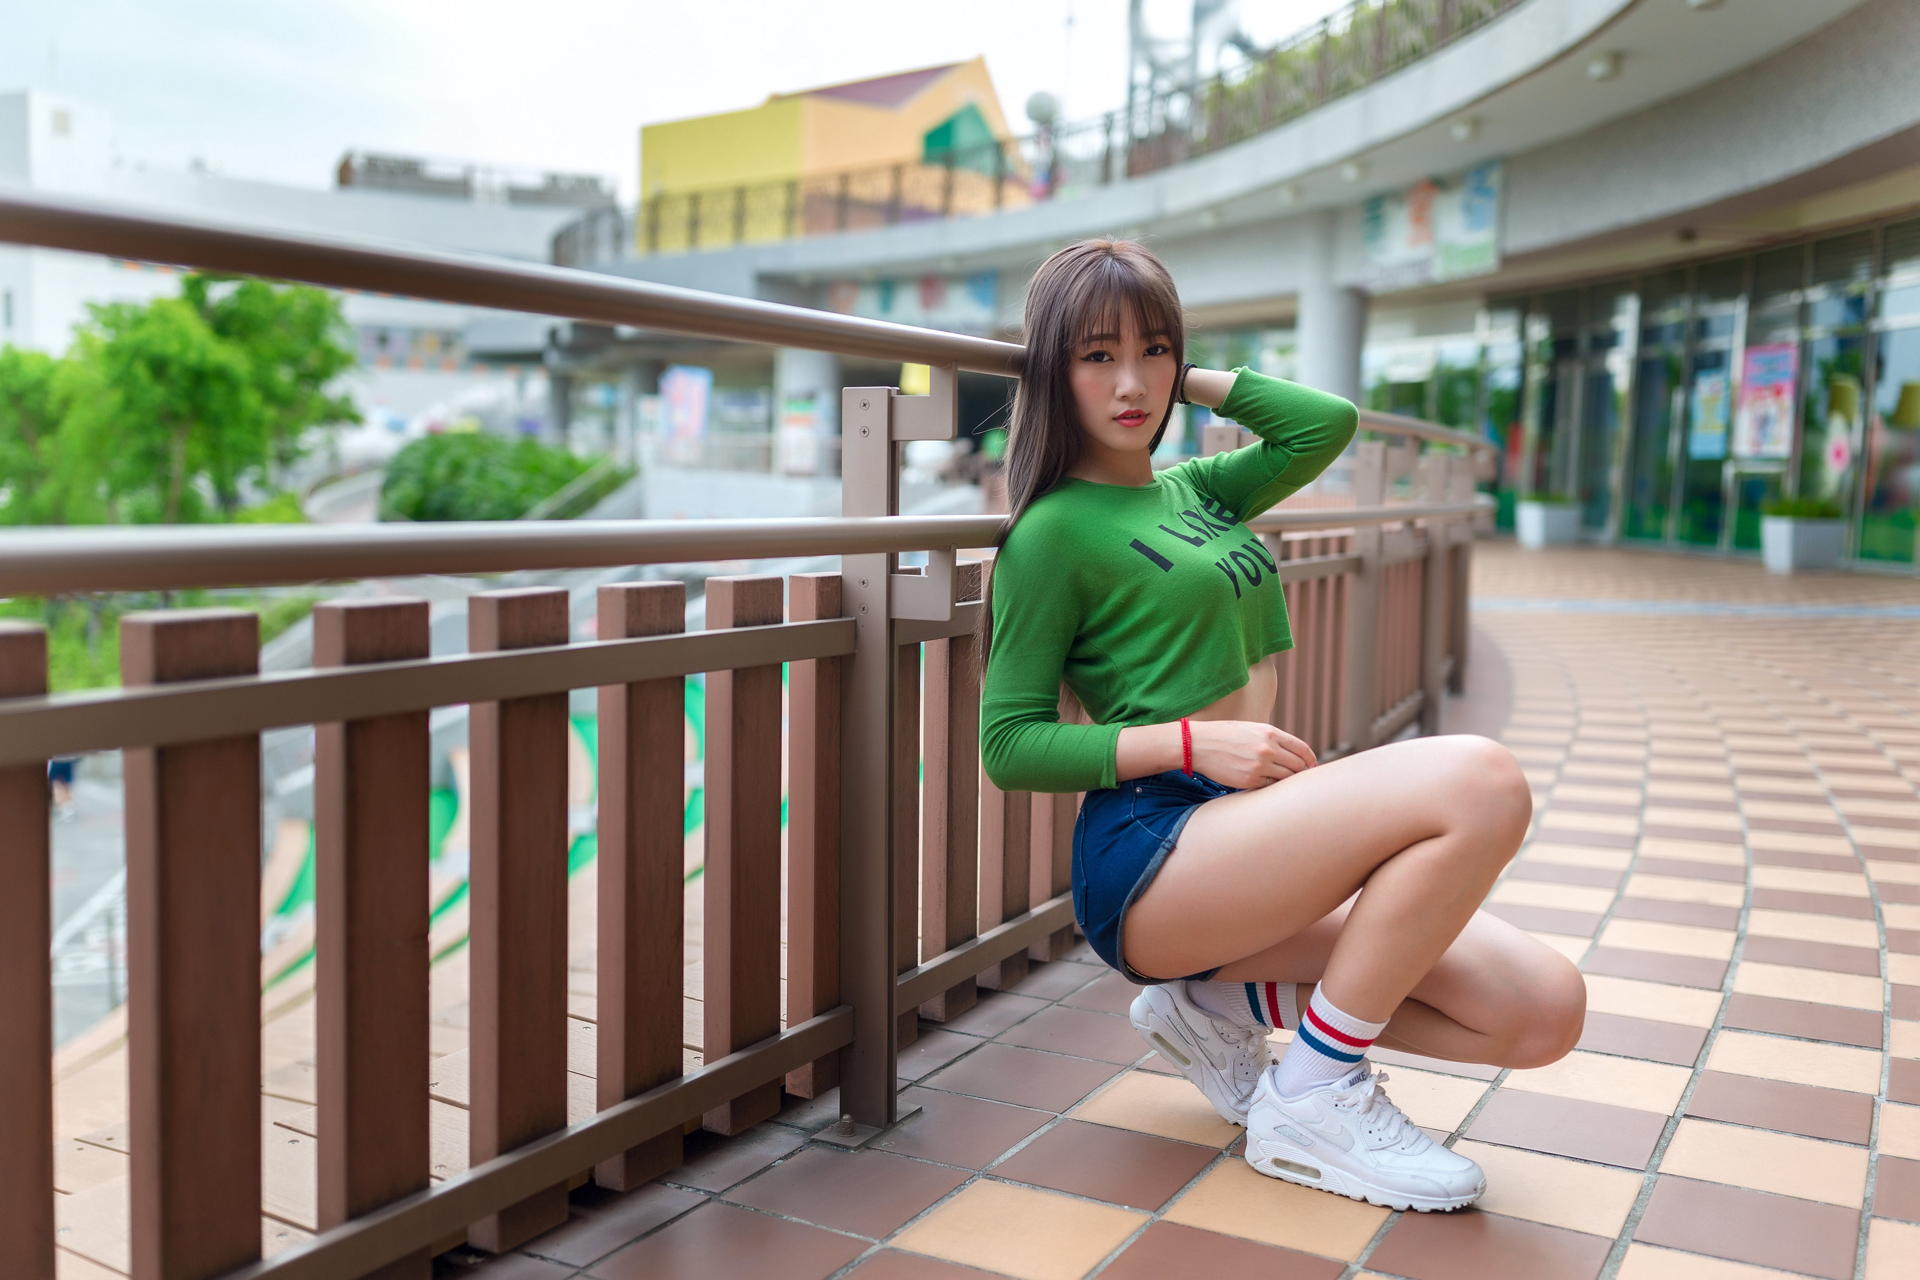 Asian Women Model Long Hair Dark Hair Leaning Sneakers Green Top Shorts Railings Depth Of Field Tile 1920x1280